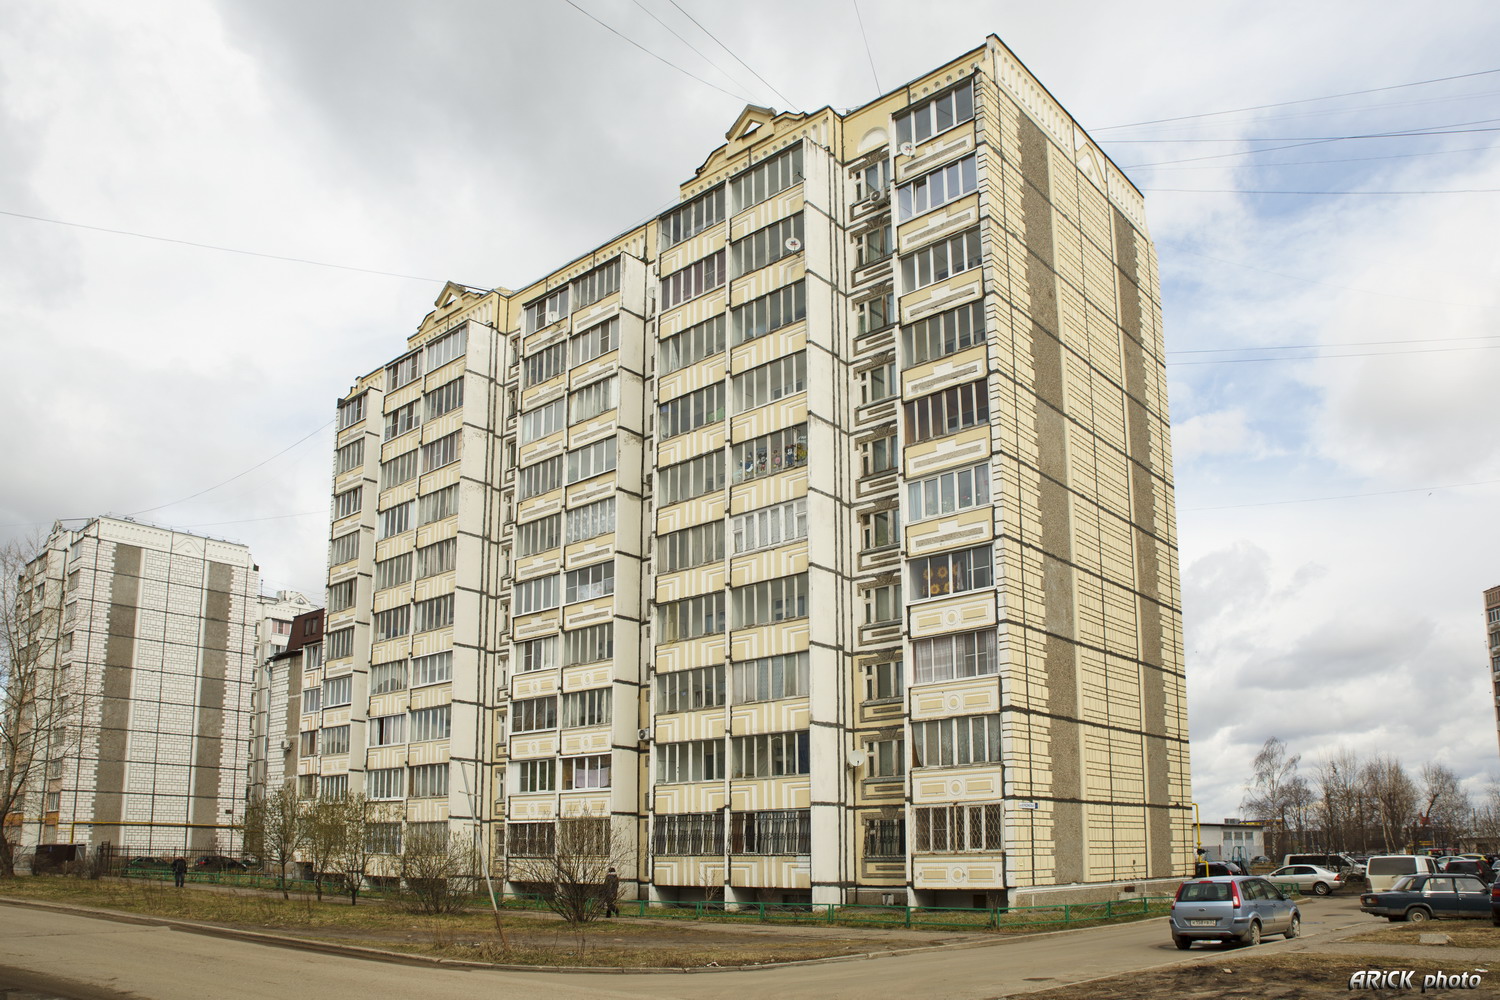 фото дома московский микрорайон иваново